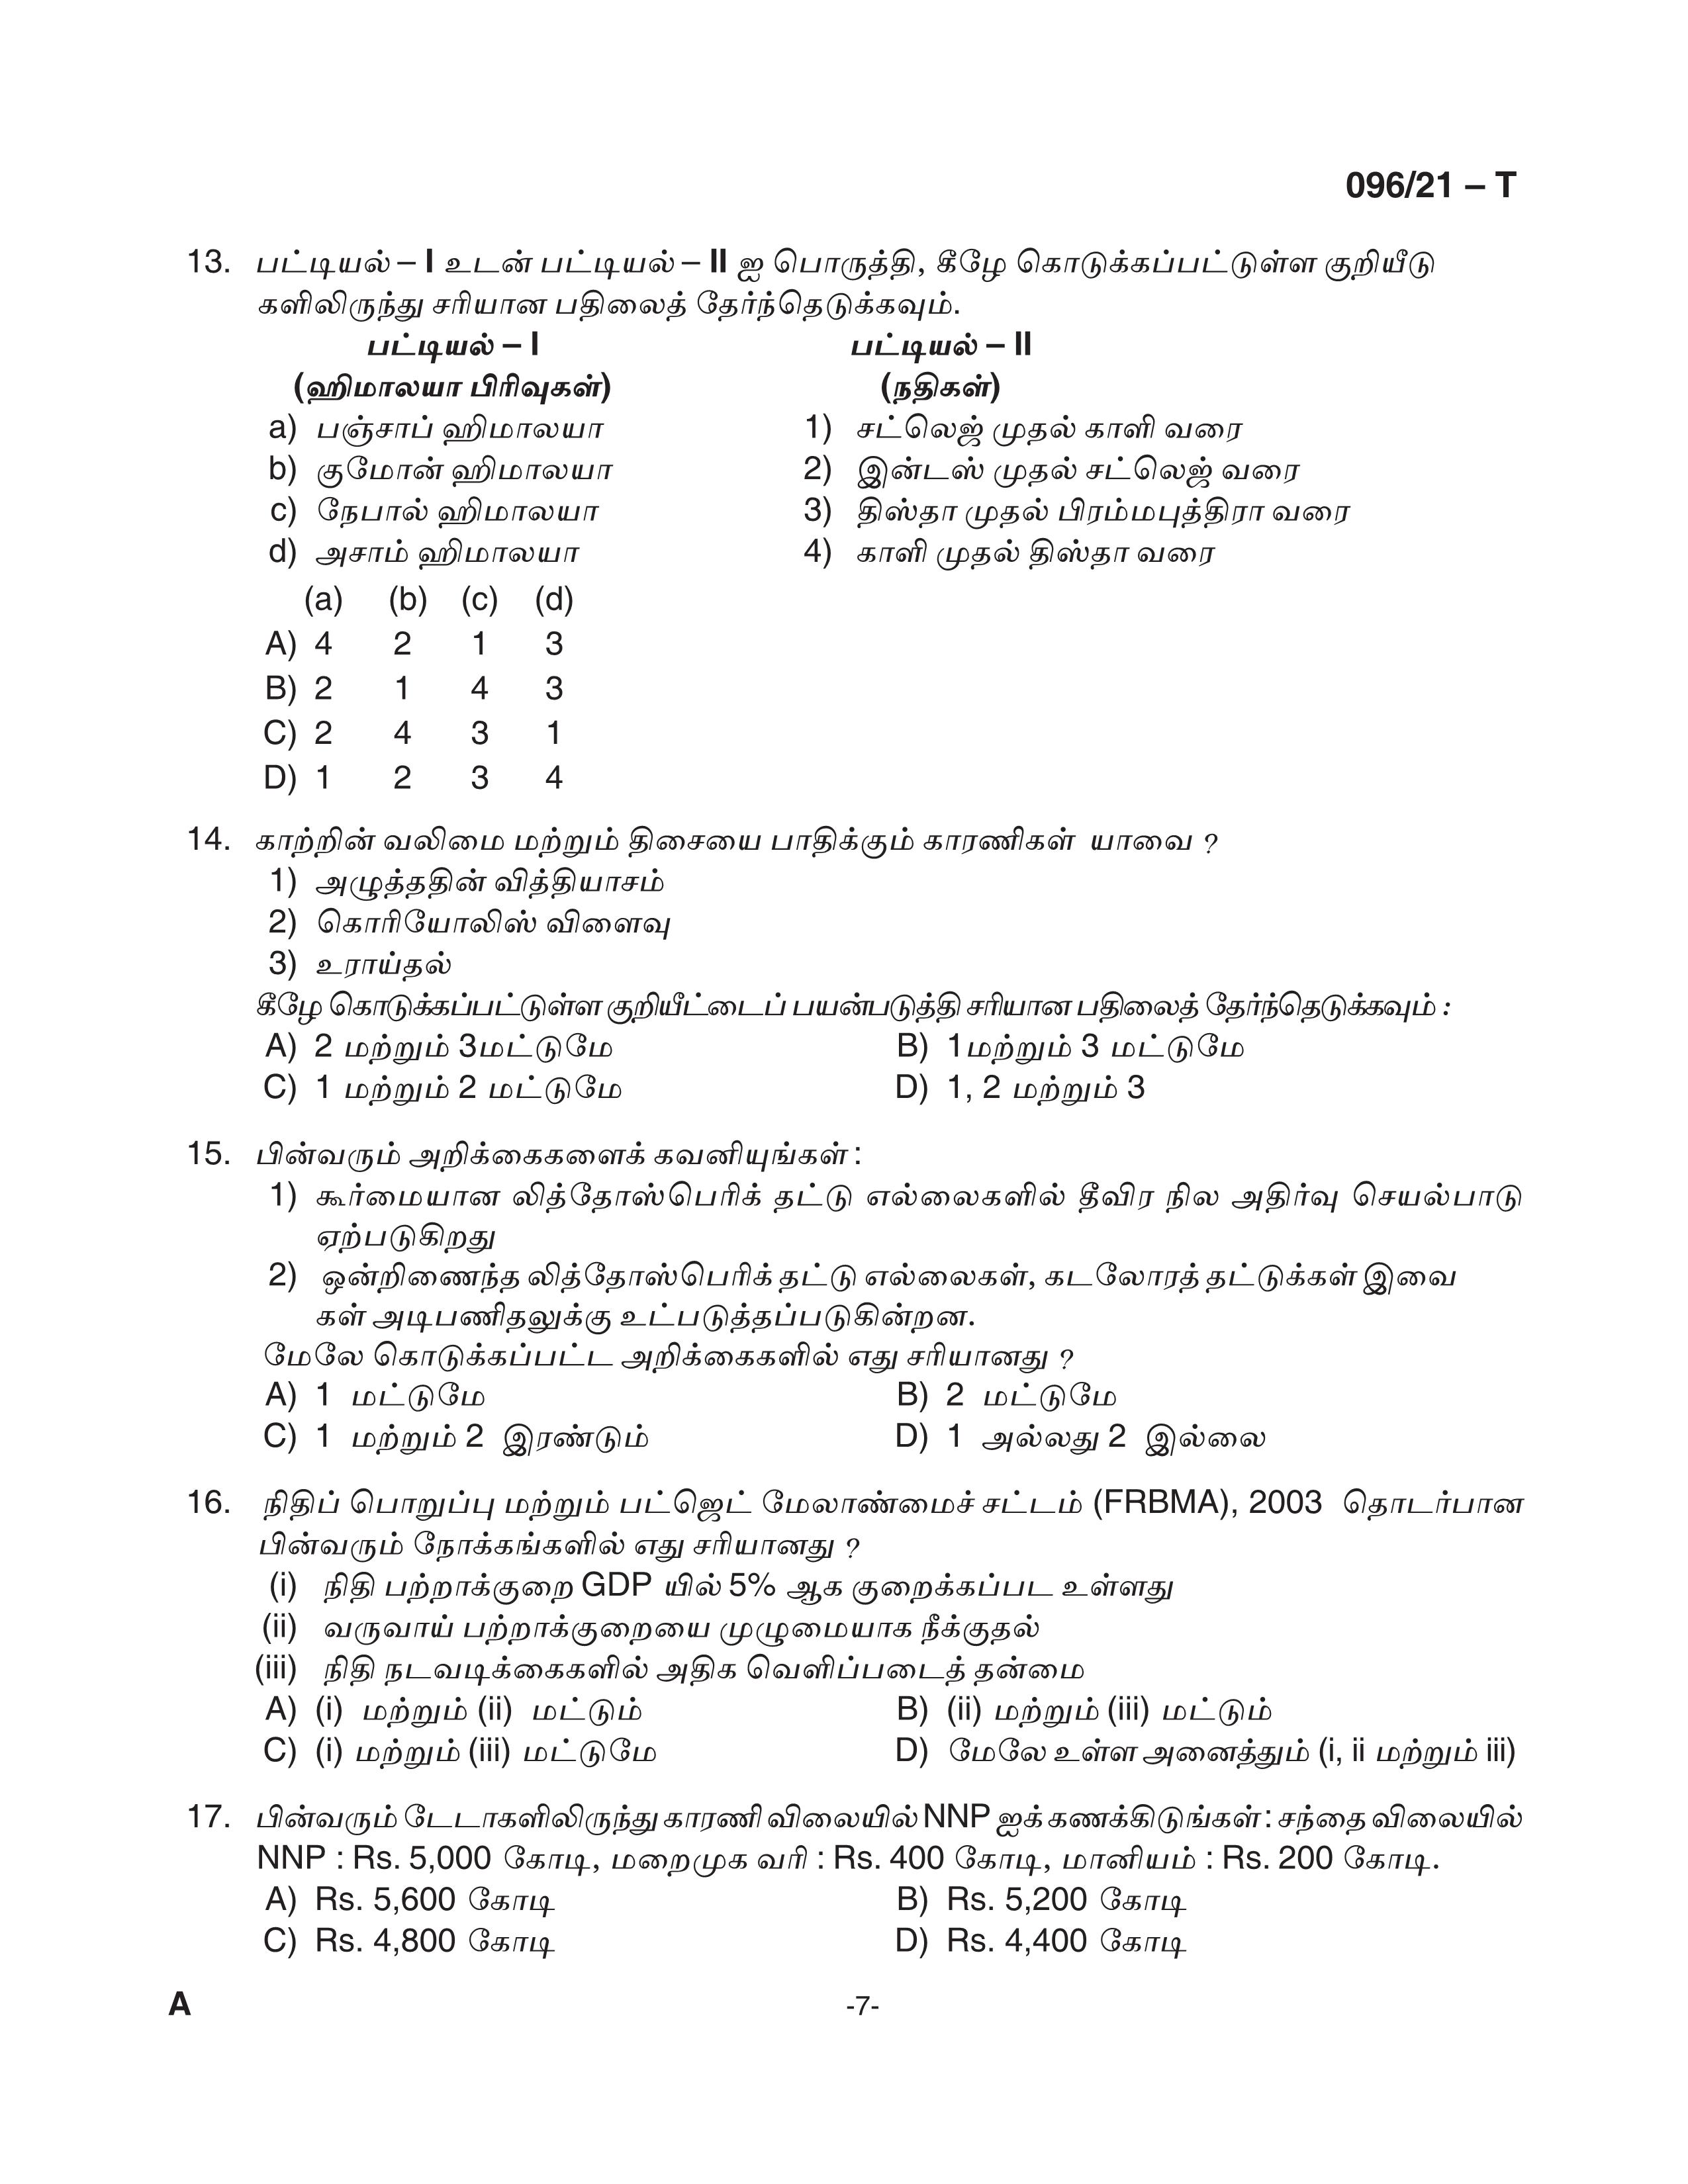 KPSC Degree Level Preliminary Exam Stage II Tamil Exam 2021 Code 09621 T 7